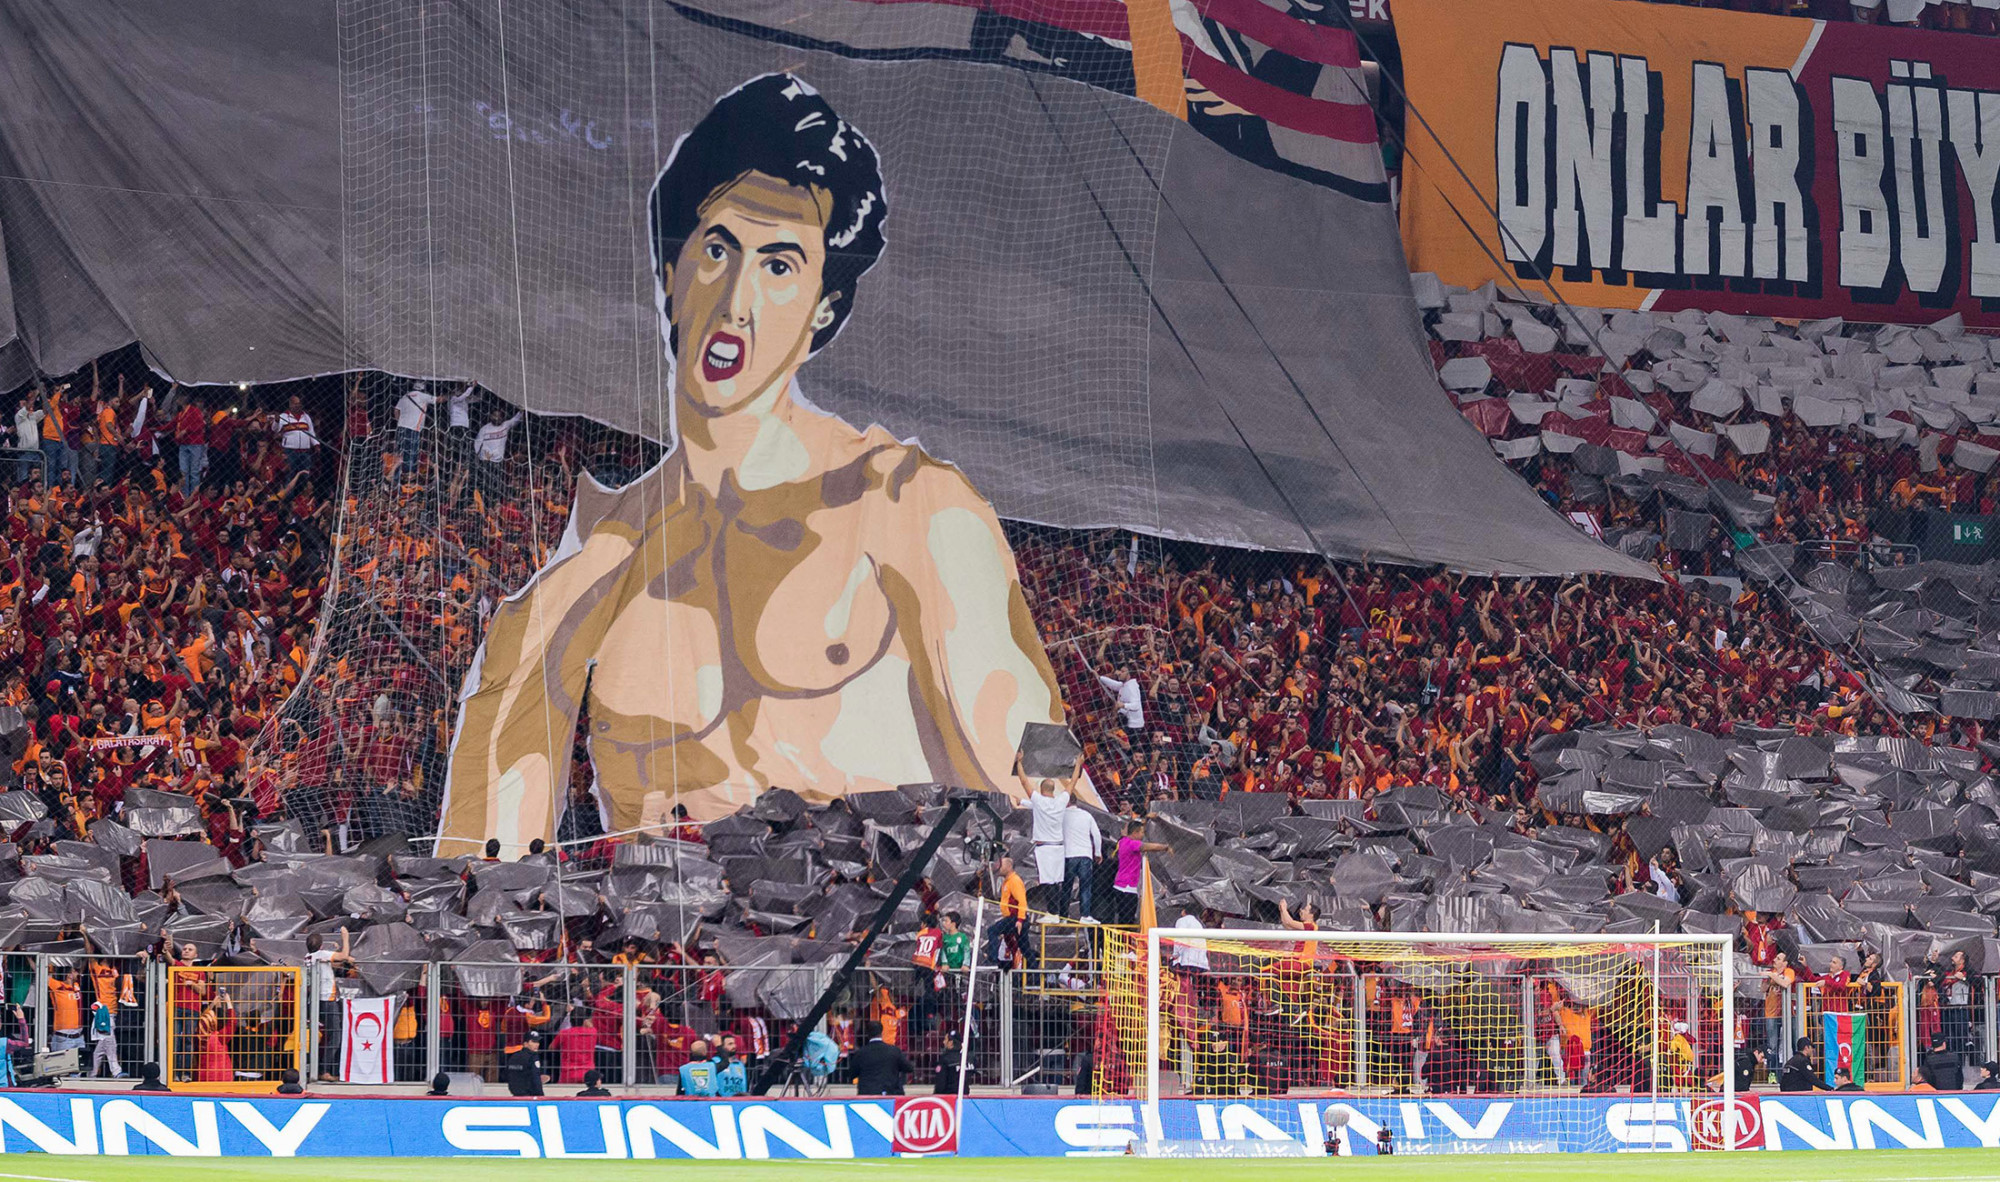 Soccer Team Shares Plunge After Fans Unfurl Rocky Balboa Banner During  Match - Bloomberg